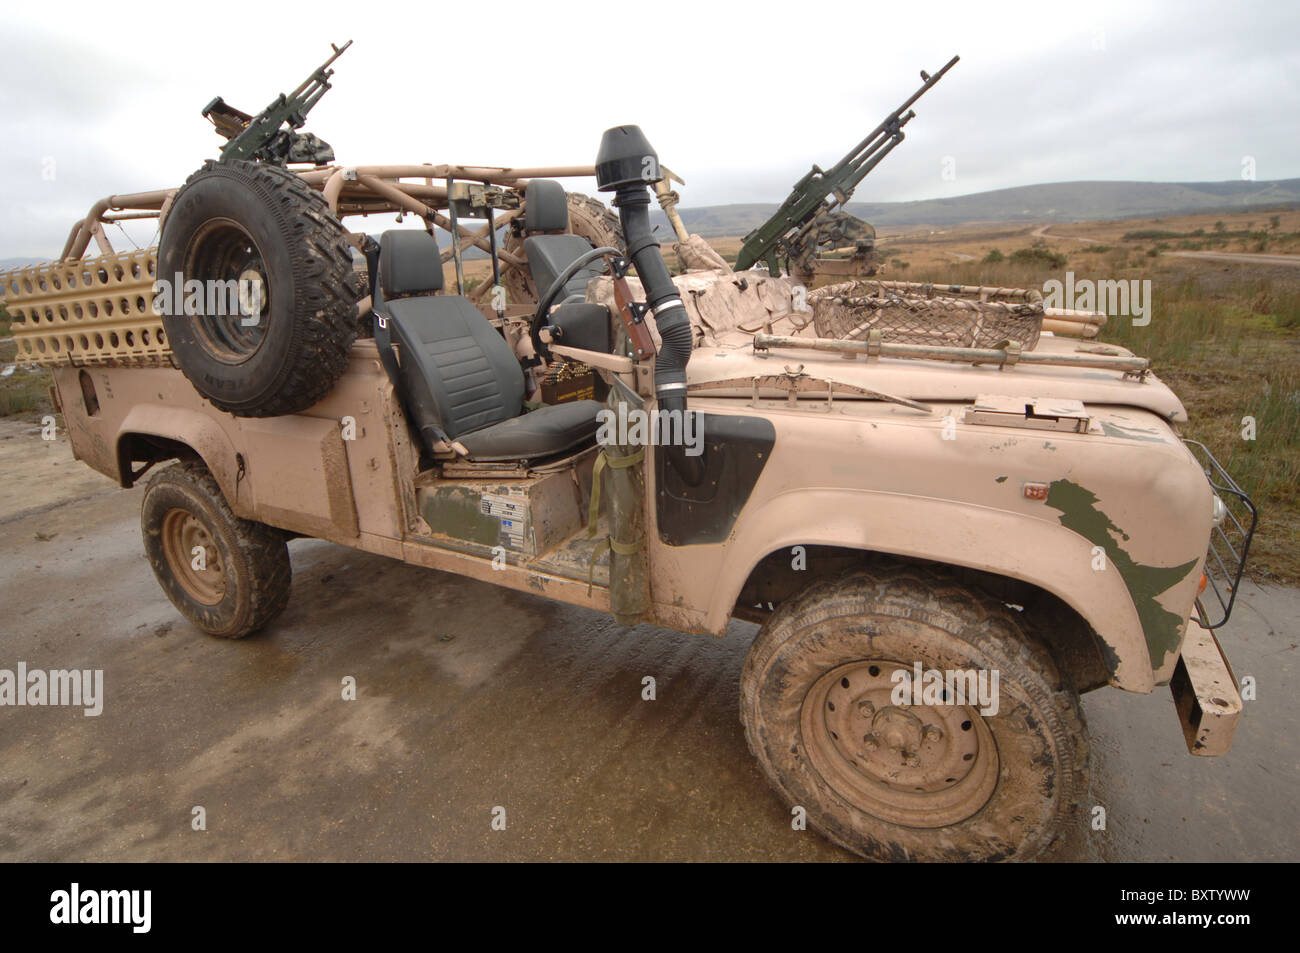 A Pink Panther Land Rover desert patrol vehicle. Stock Photo